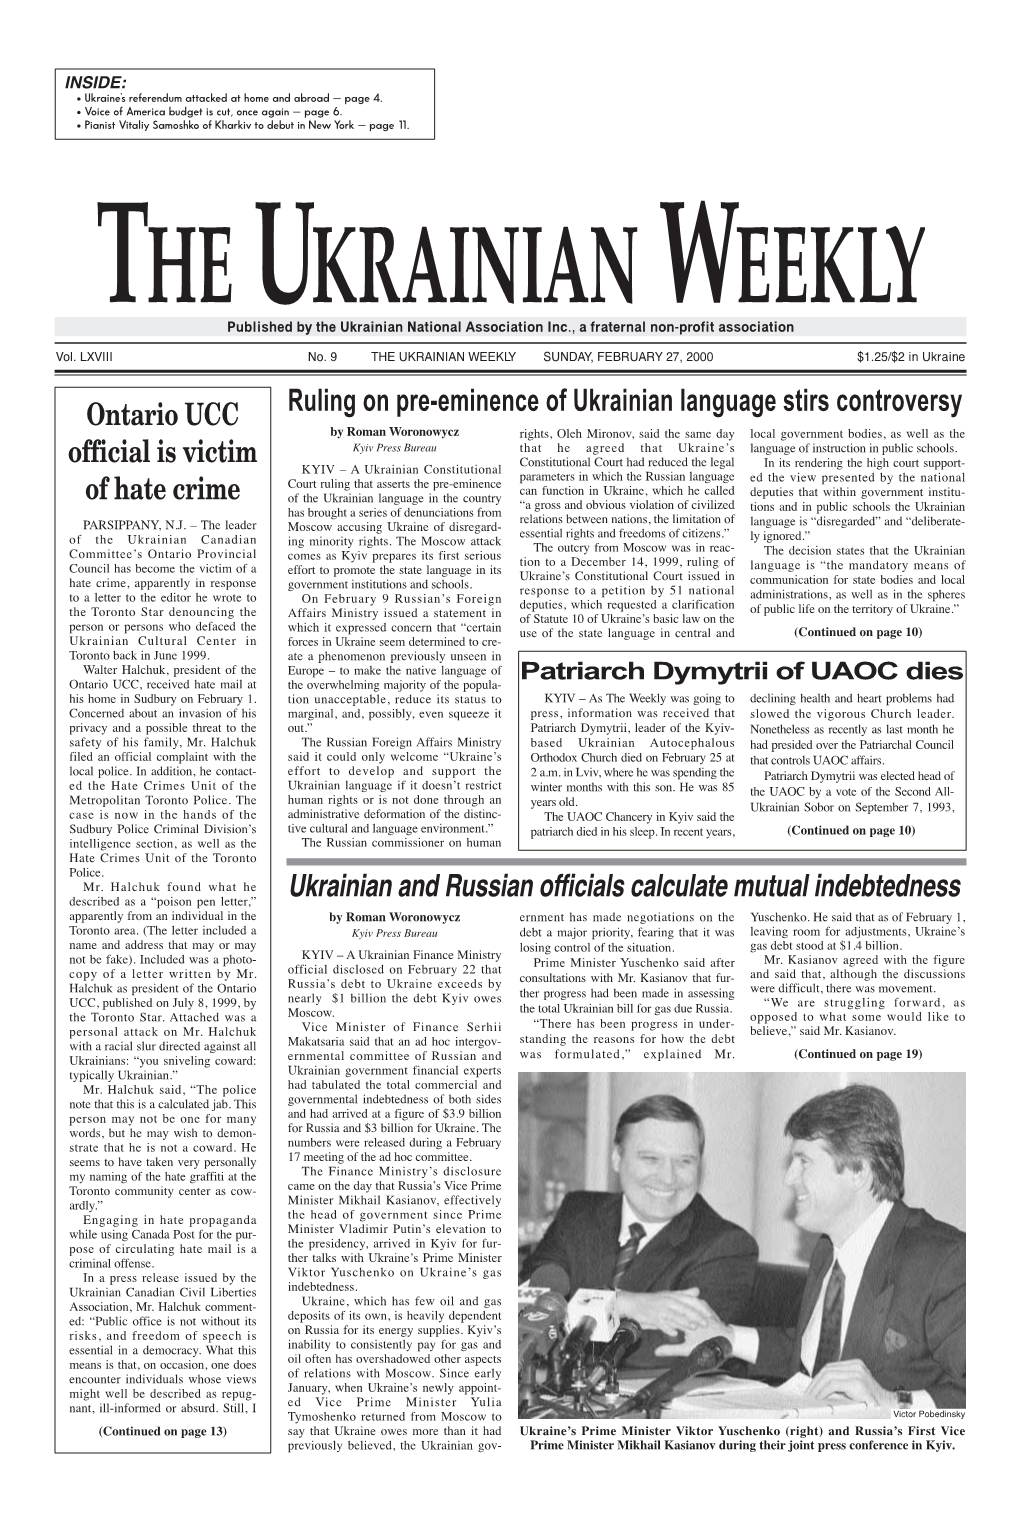 The Ukrainian Weekly 2000, No.9